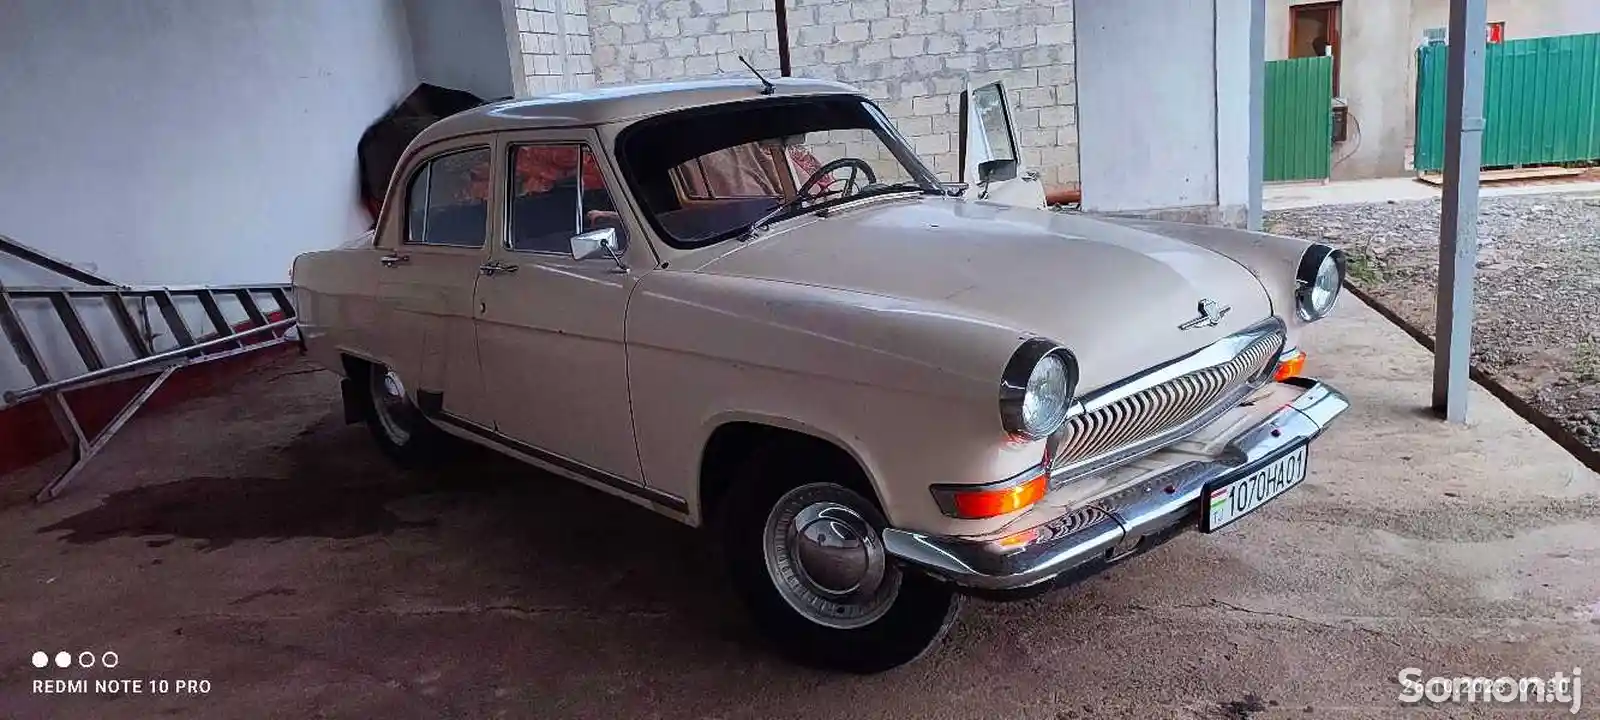 ГАЗ 21, 1959-2